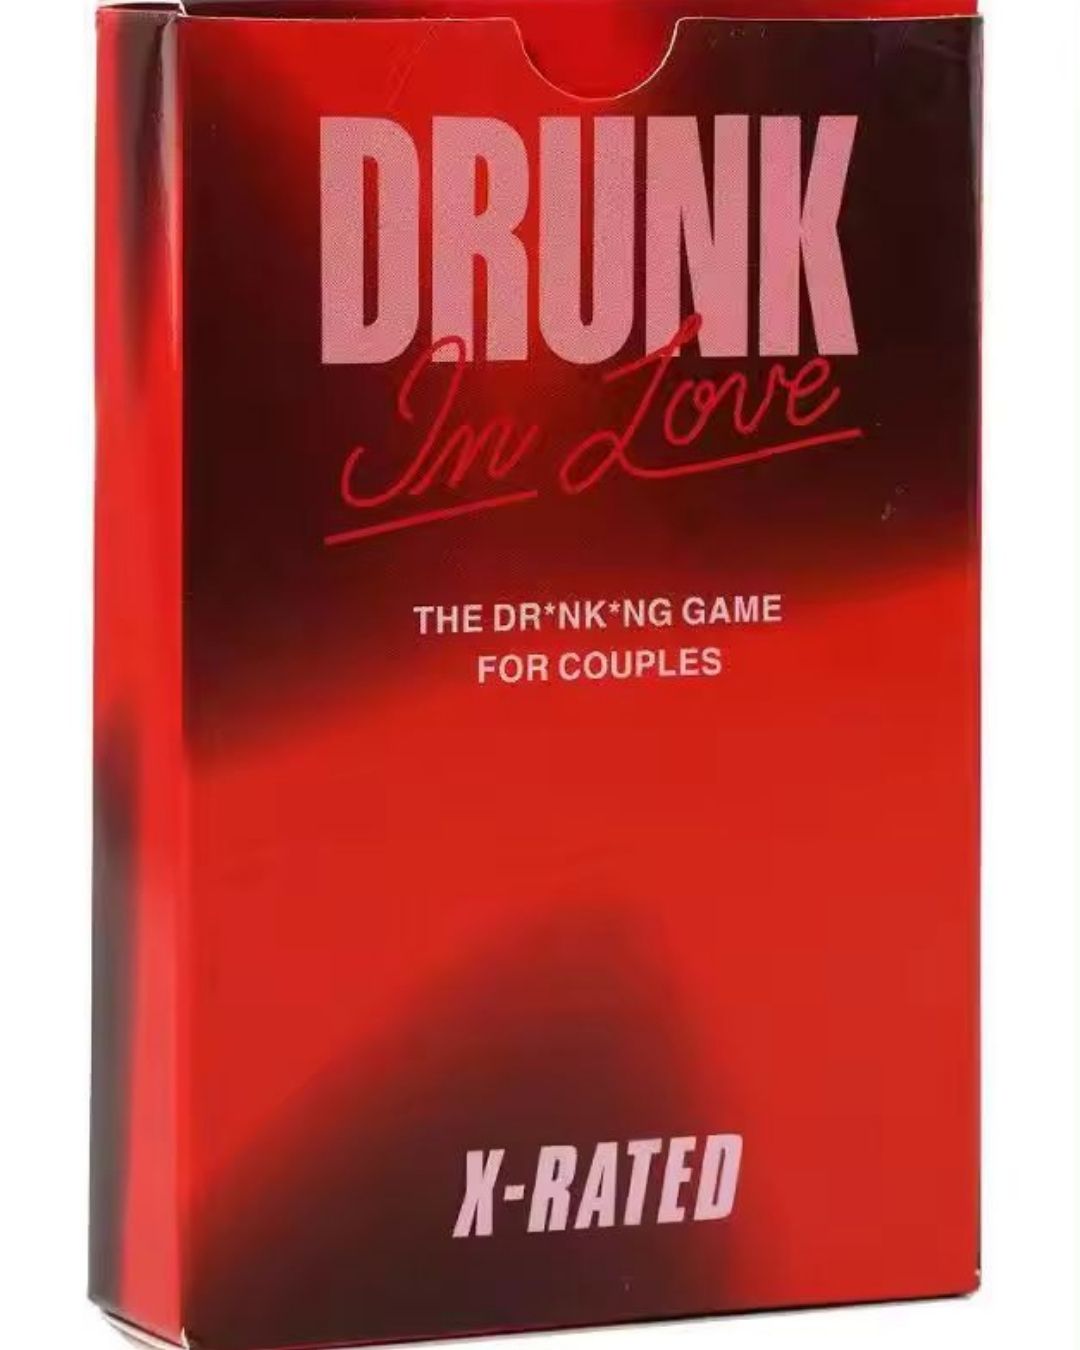 Drunk in Love Cards